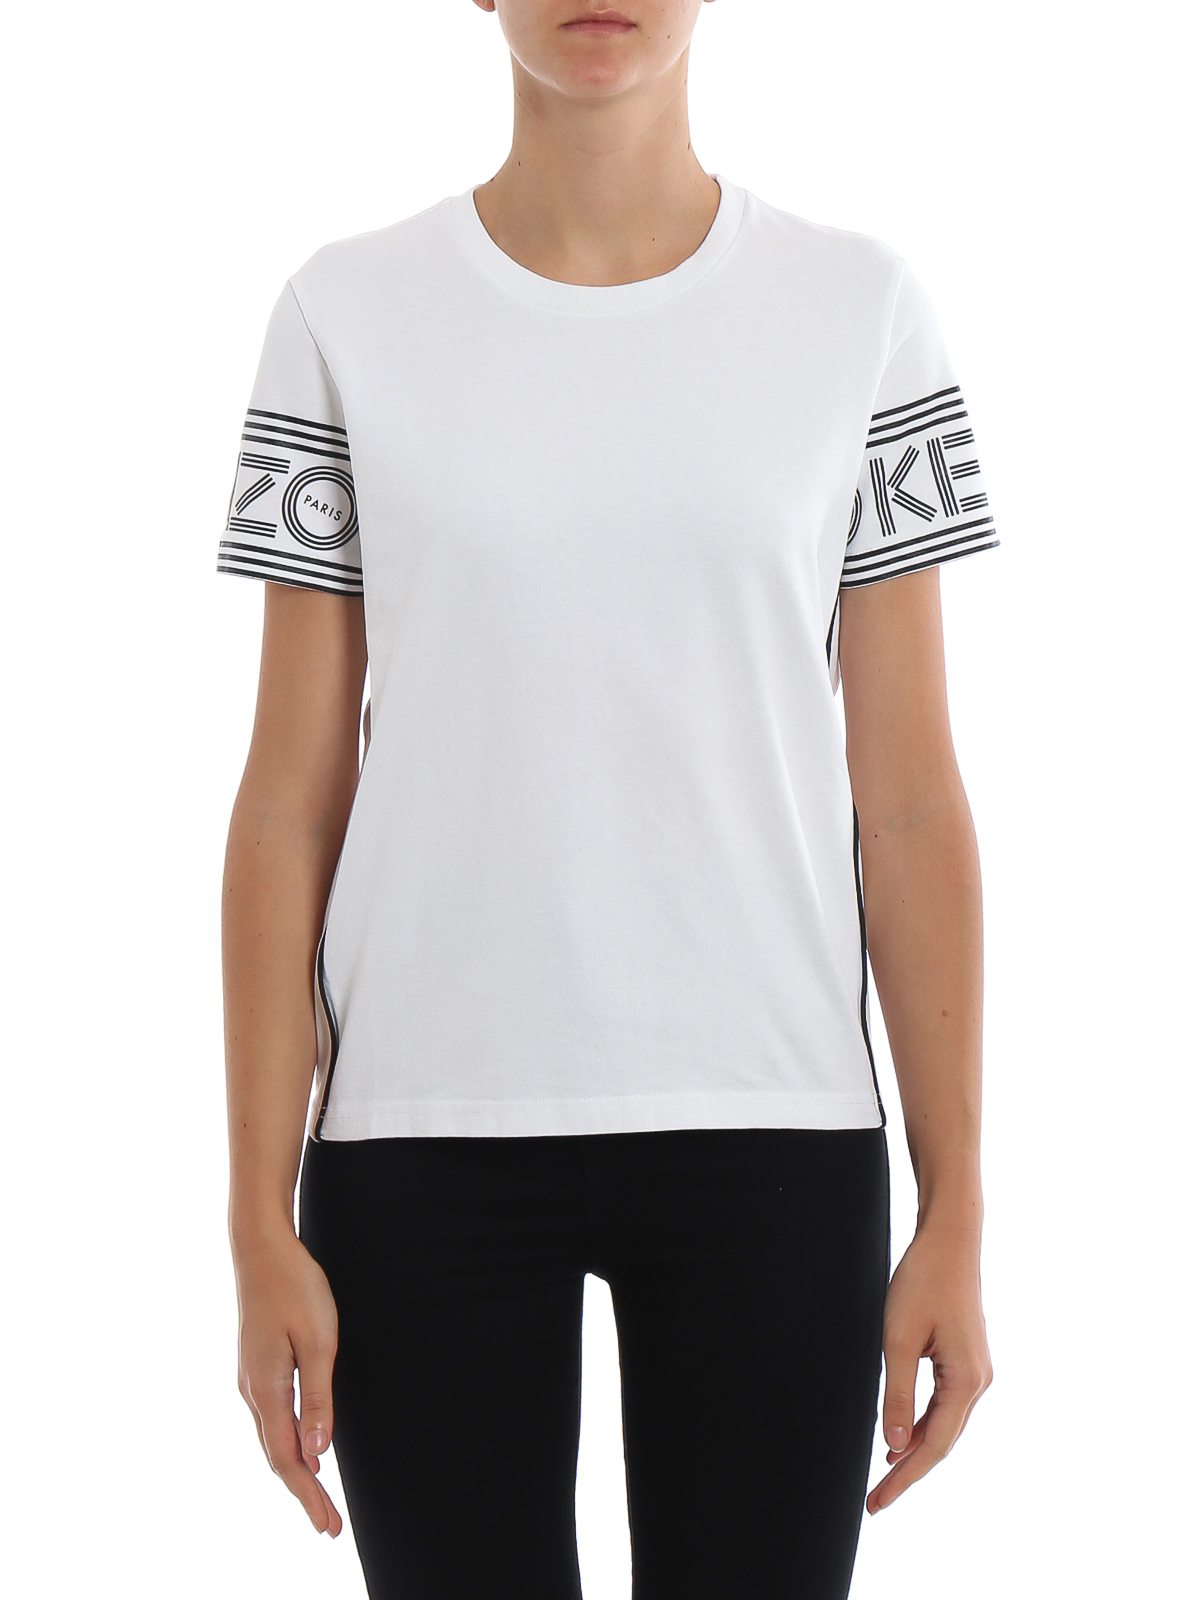 Kenzo - Kenzo Sport white cotton T-shirt -